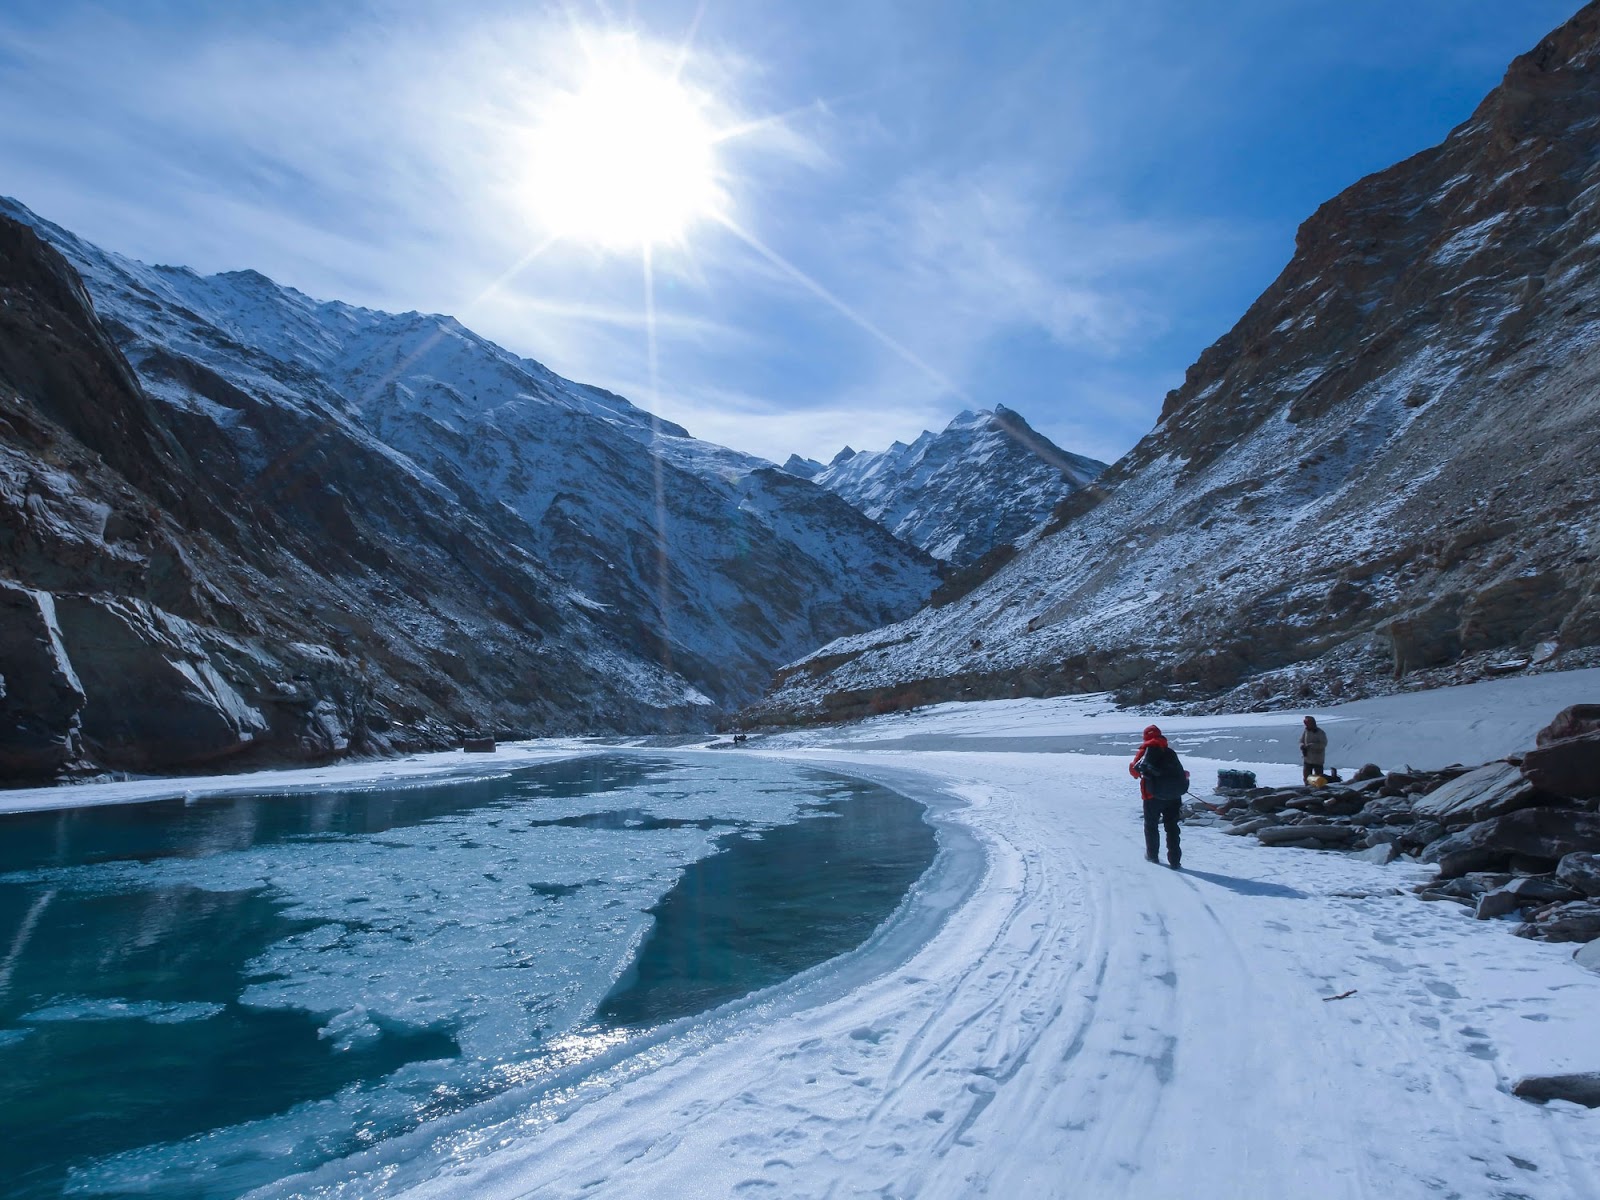 The Chadar Trek, sheet of ice that forms over the surface of River Zanskar